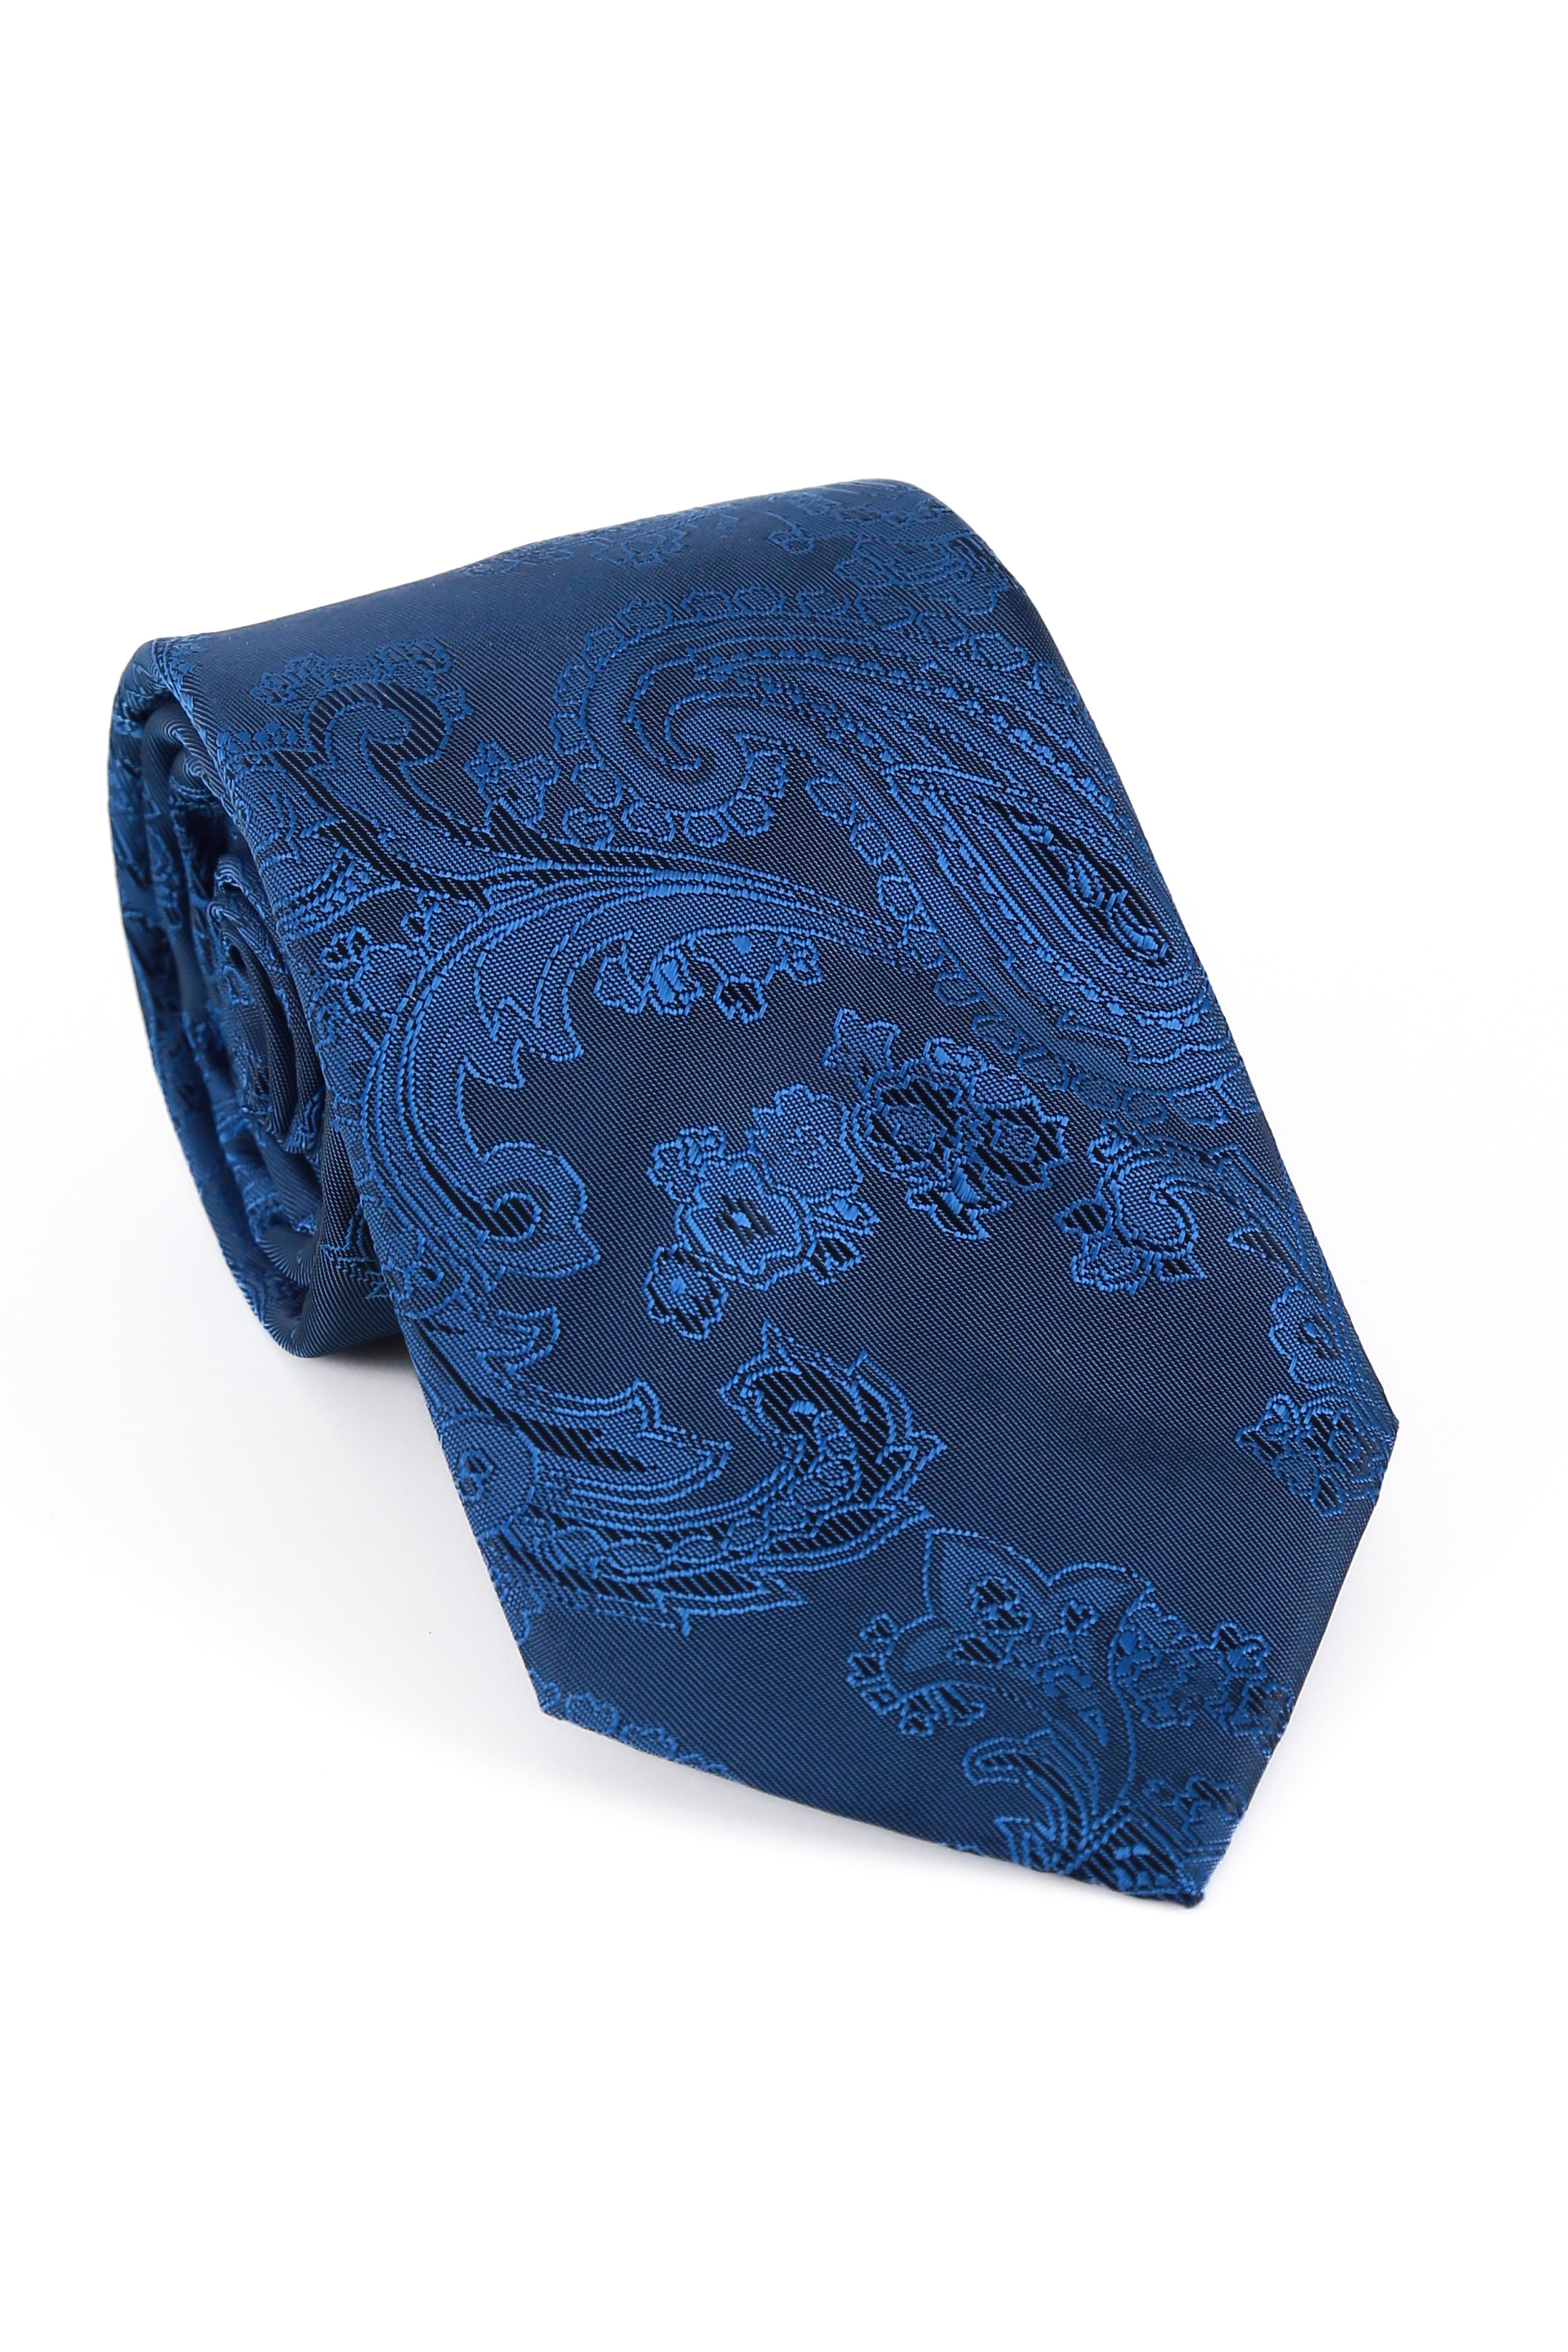 Men's Paisley Tie Cufflink Set - Blue